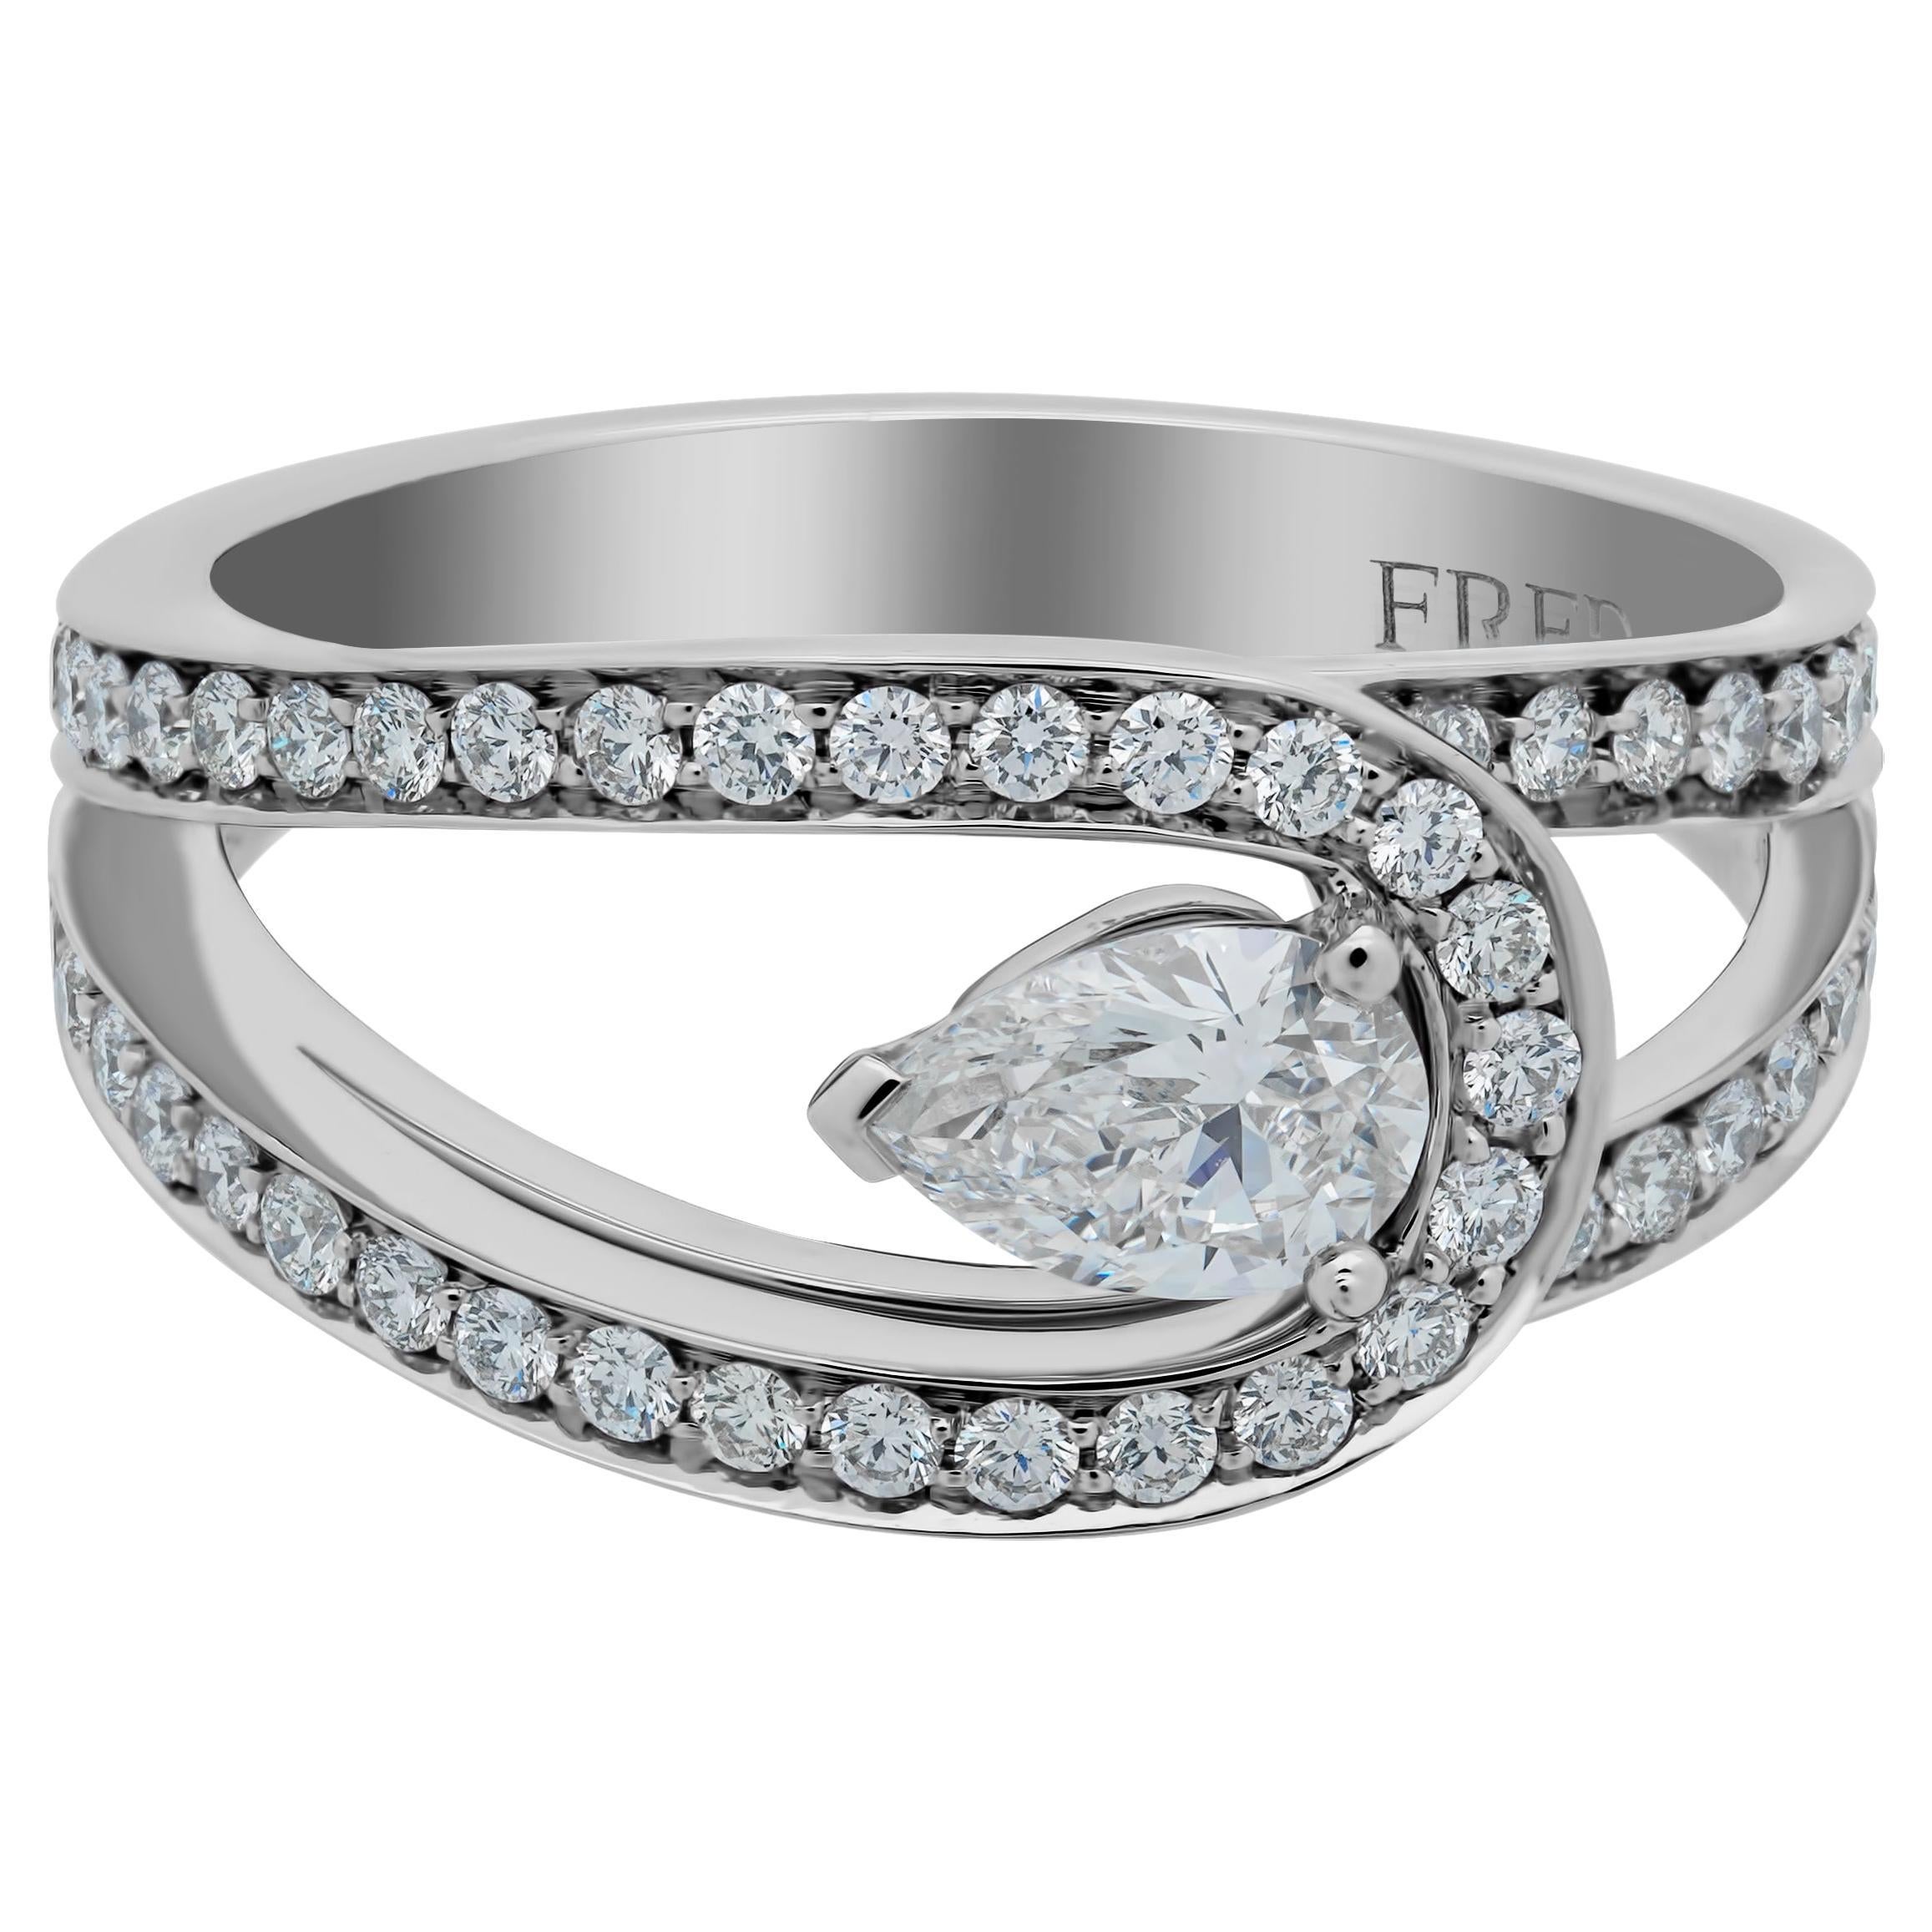 FRED Lovelight Platinum Pear Cut Center Diamond Engagement Ring sz 6